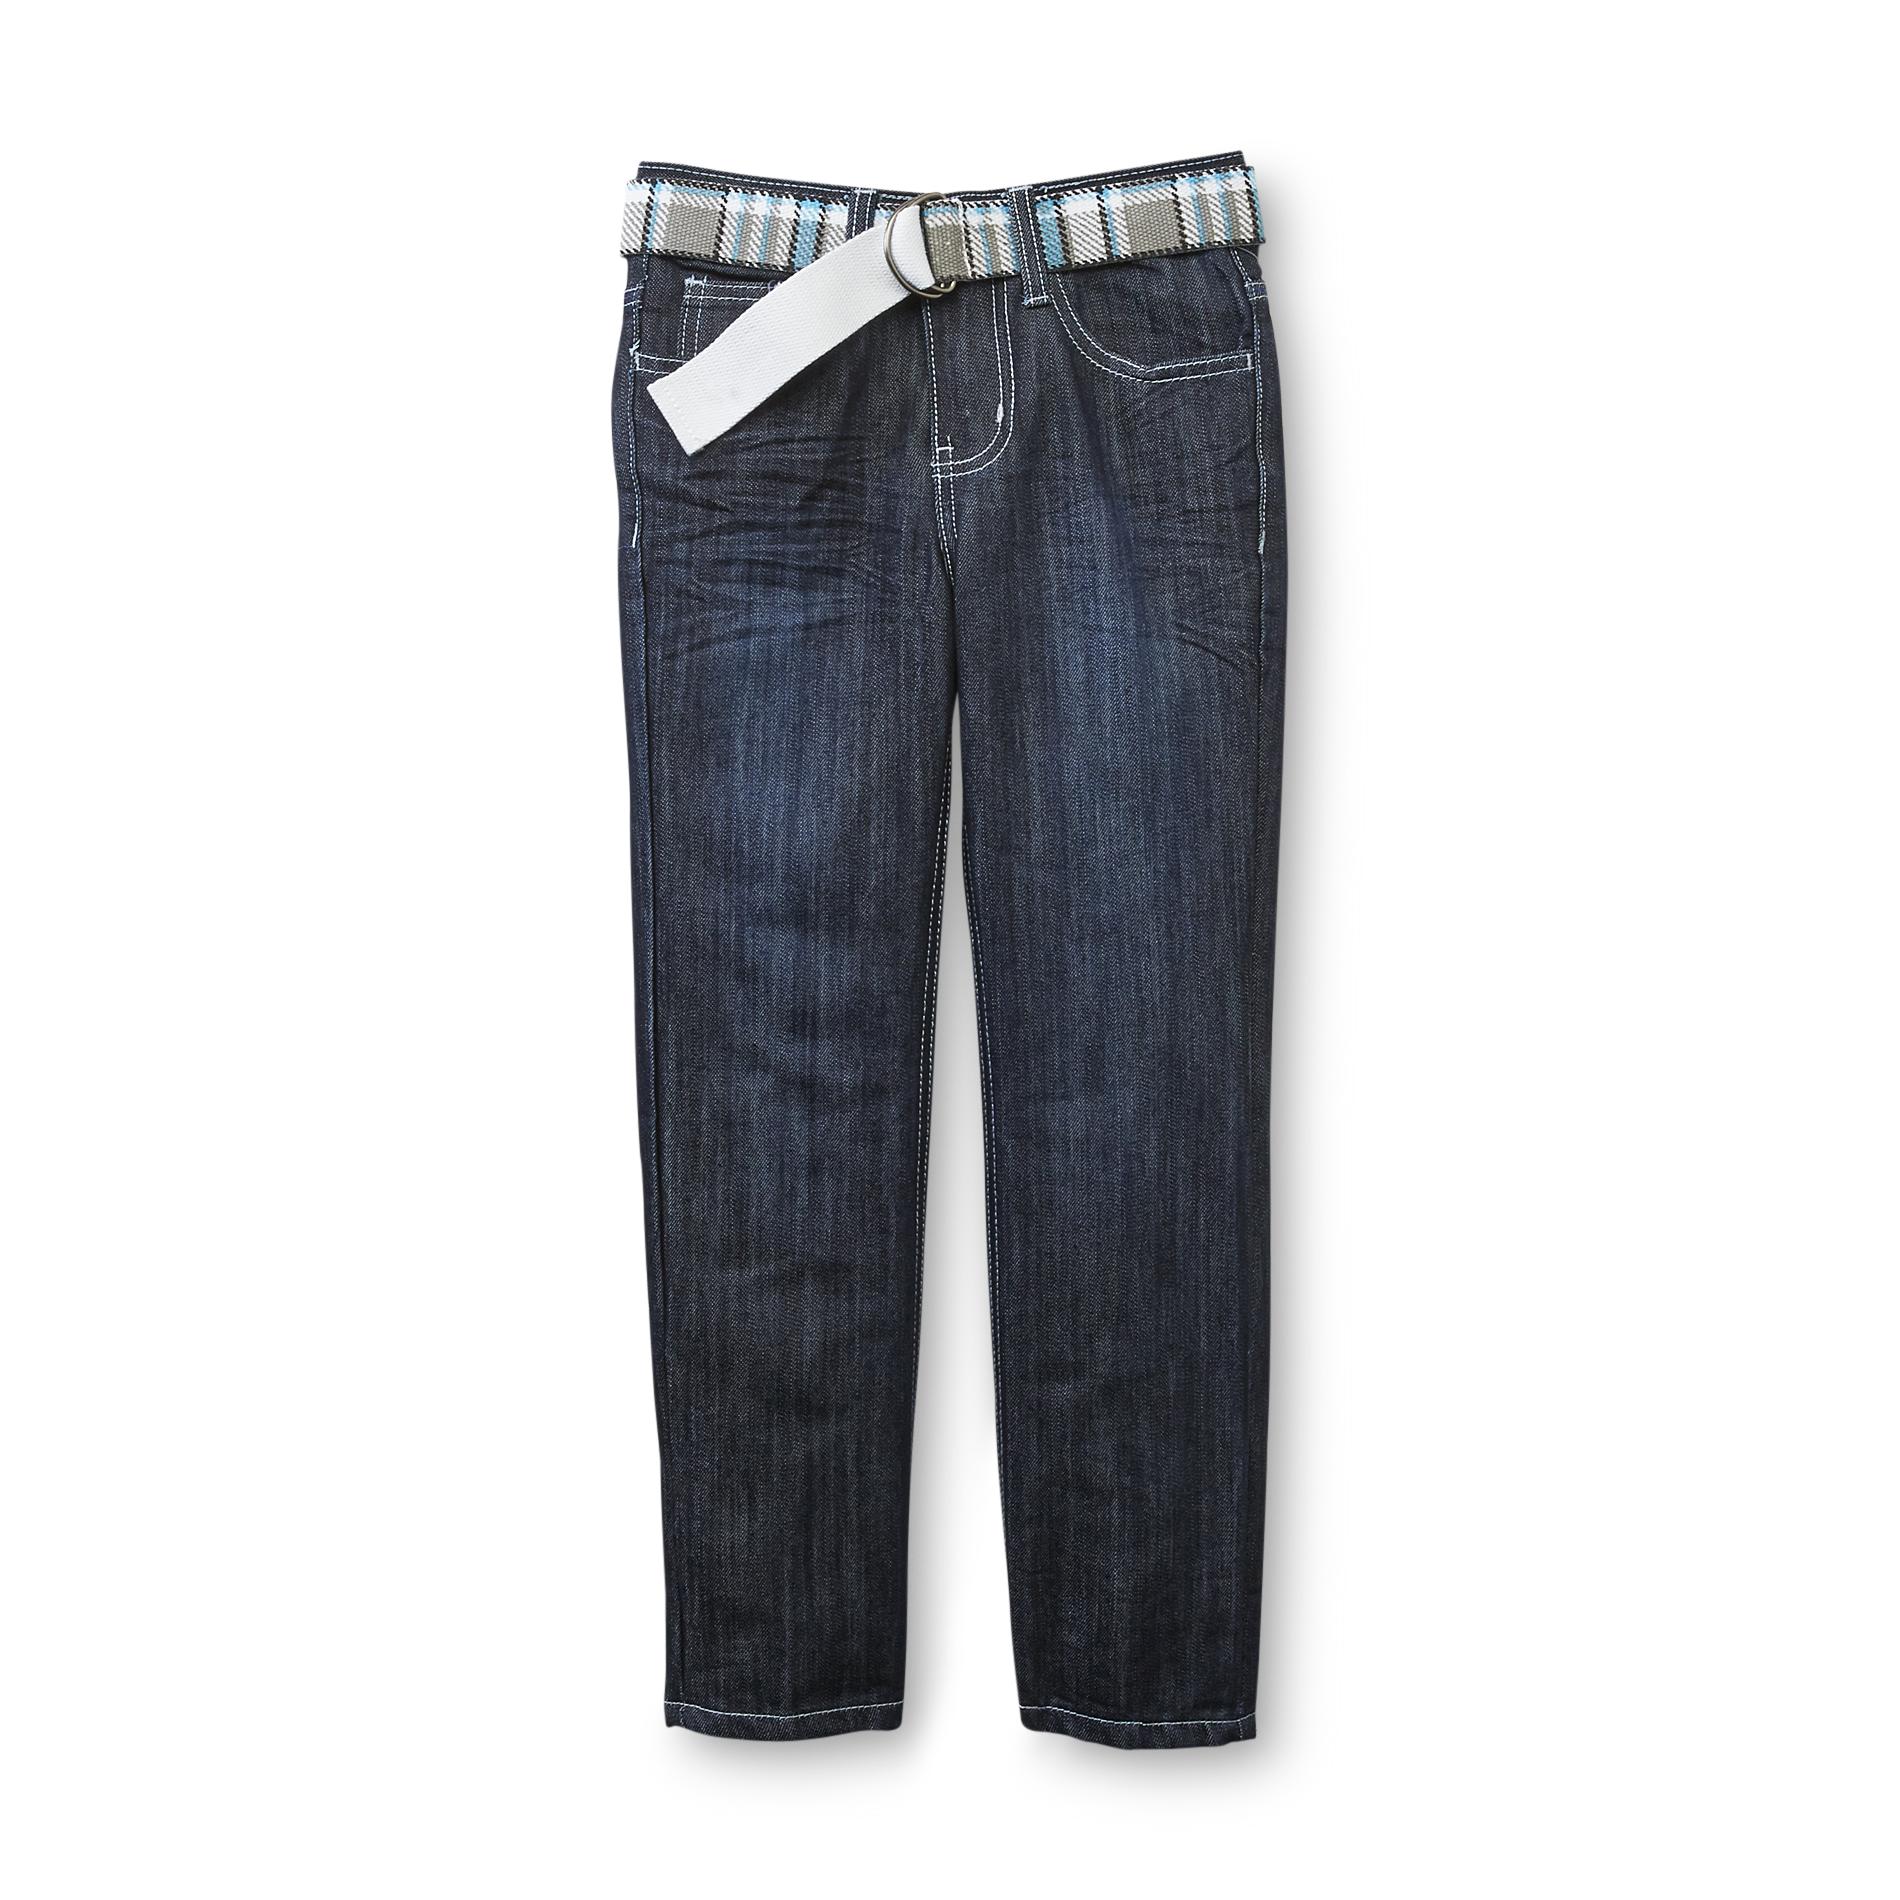 Mongoose Girl's Straight Fit Jeans & Belt - Diamond Print